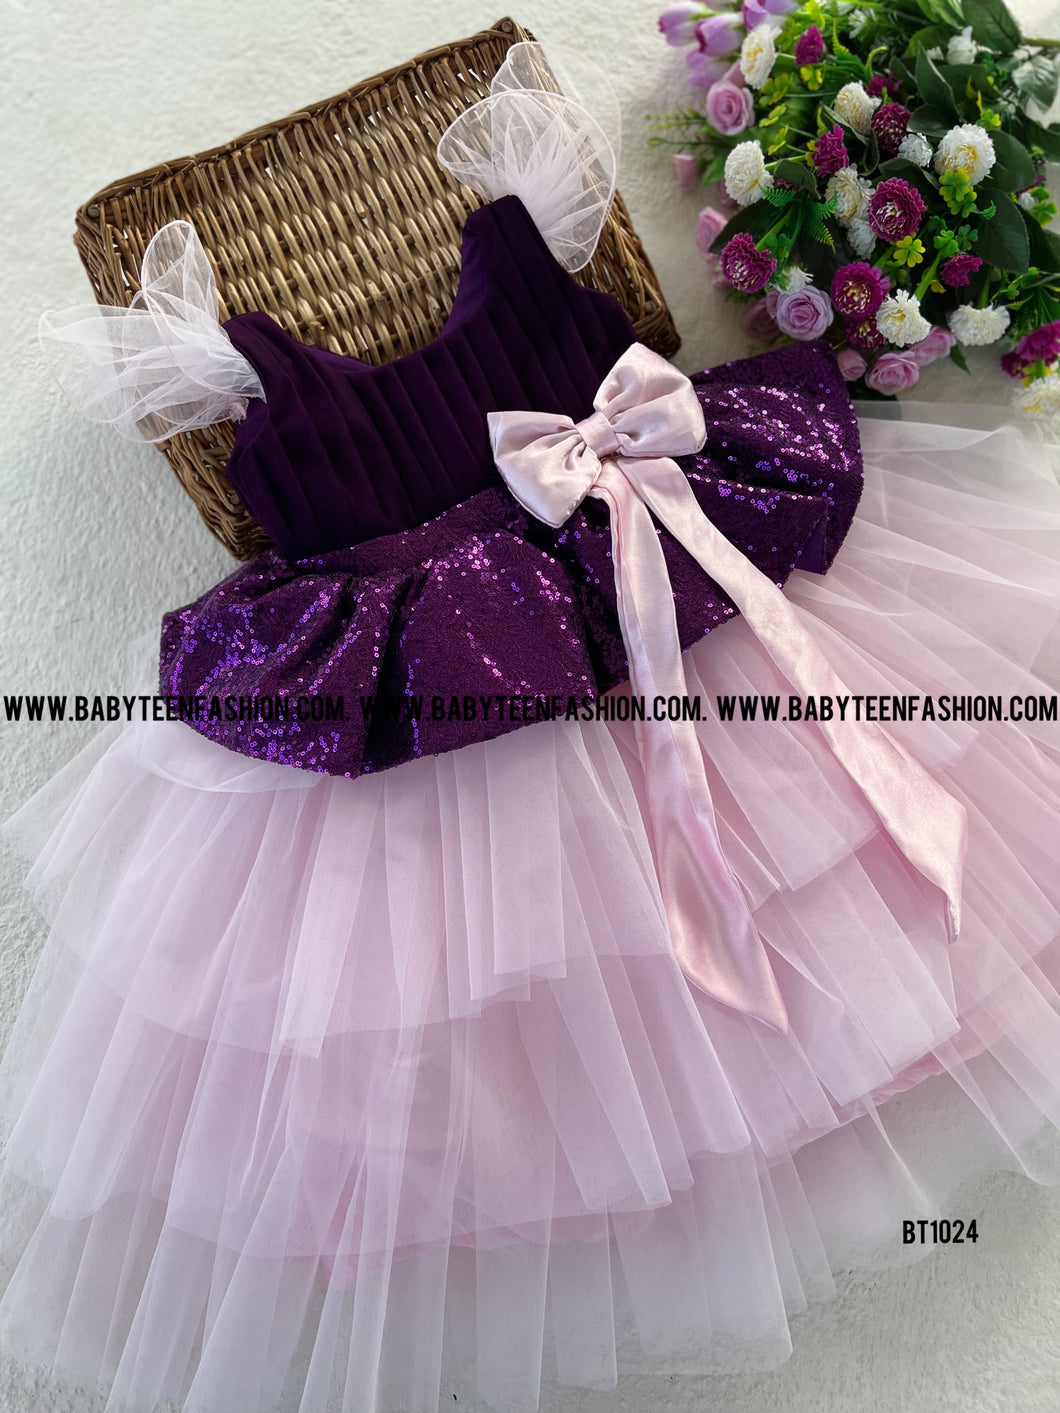 BT1024 Enchanted Evening Sparkle Dress – Let Her Shine Bright